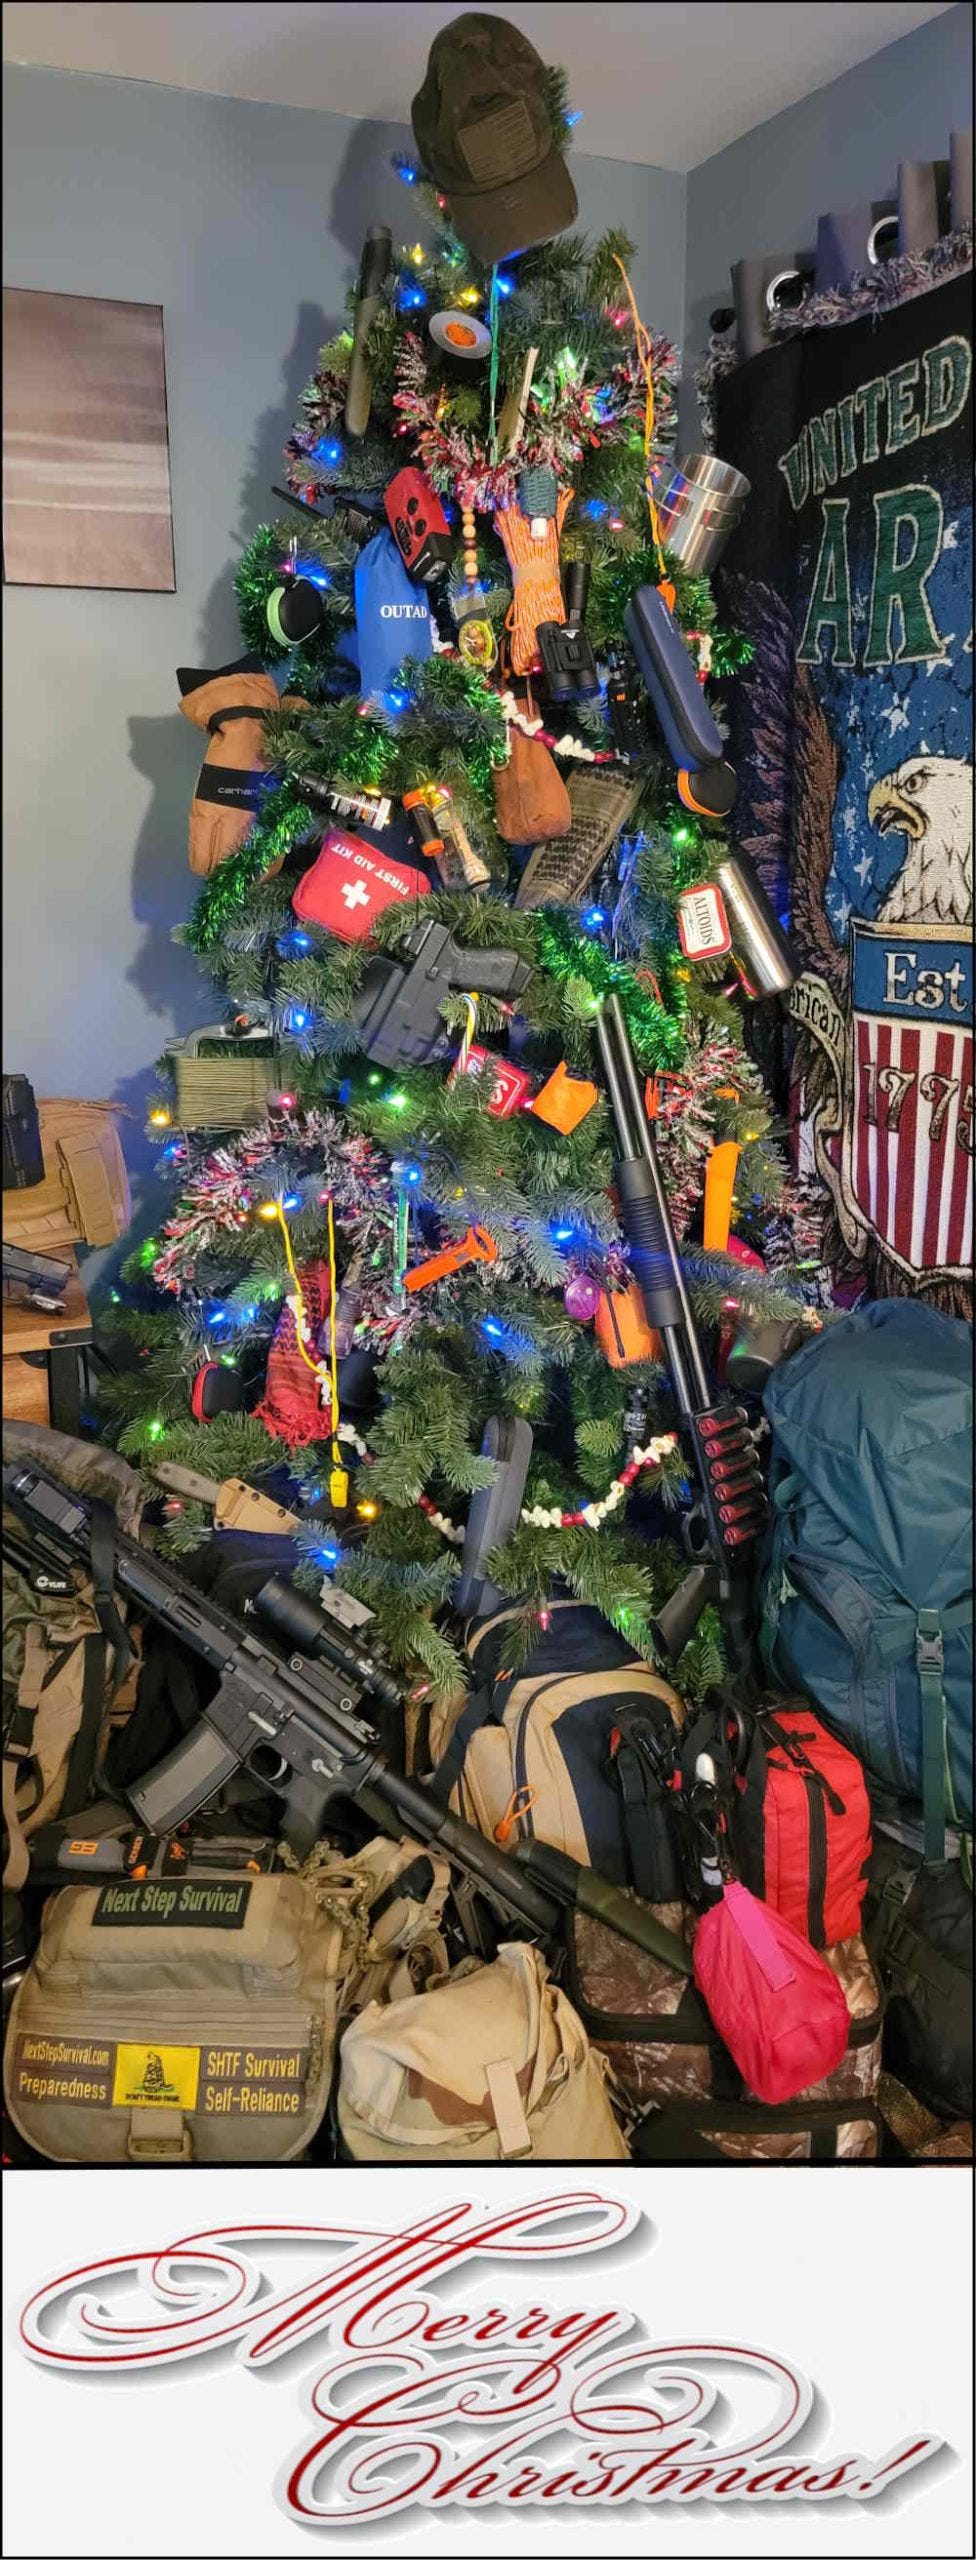 Merry Christmas - My Prepper Tree